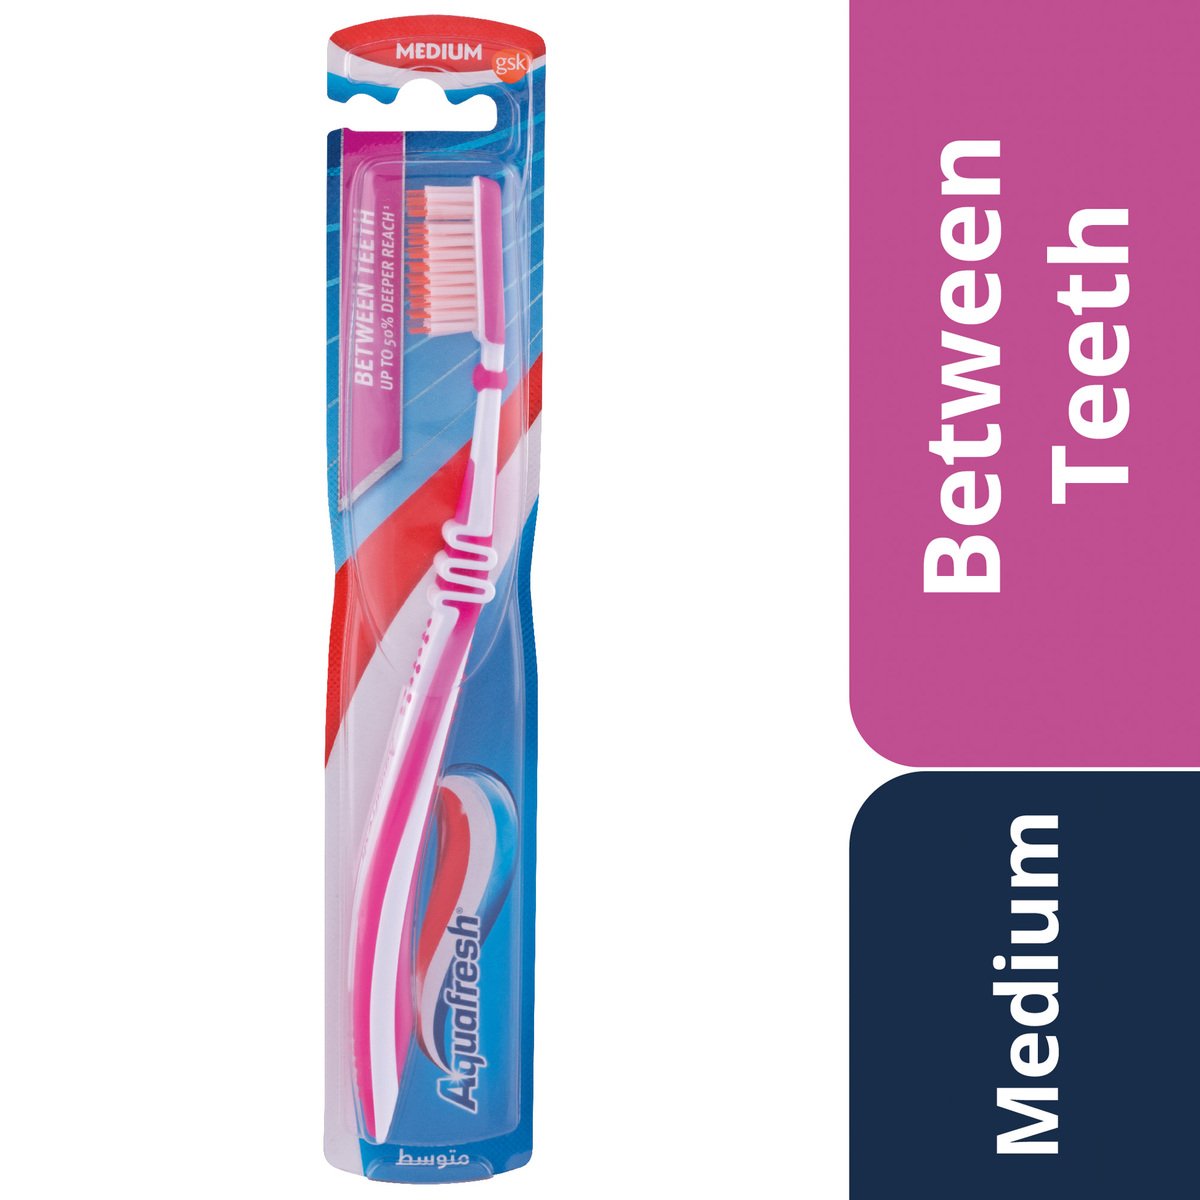 Aquafresh Between Teeth Toothbrush Medium Assorted Color 1 pc